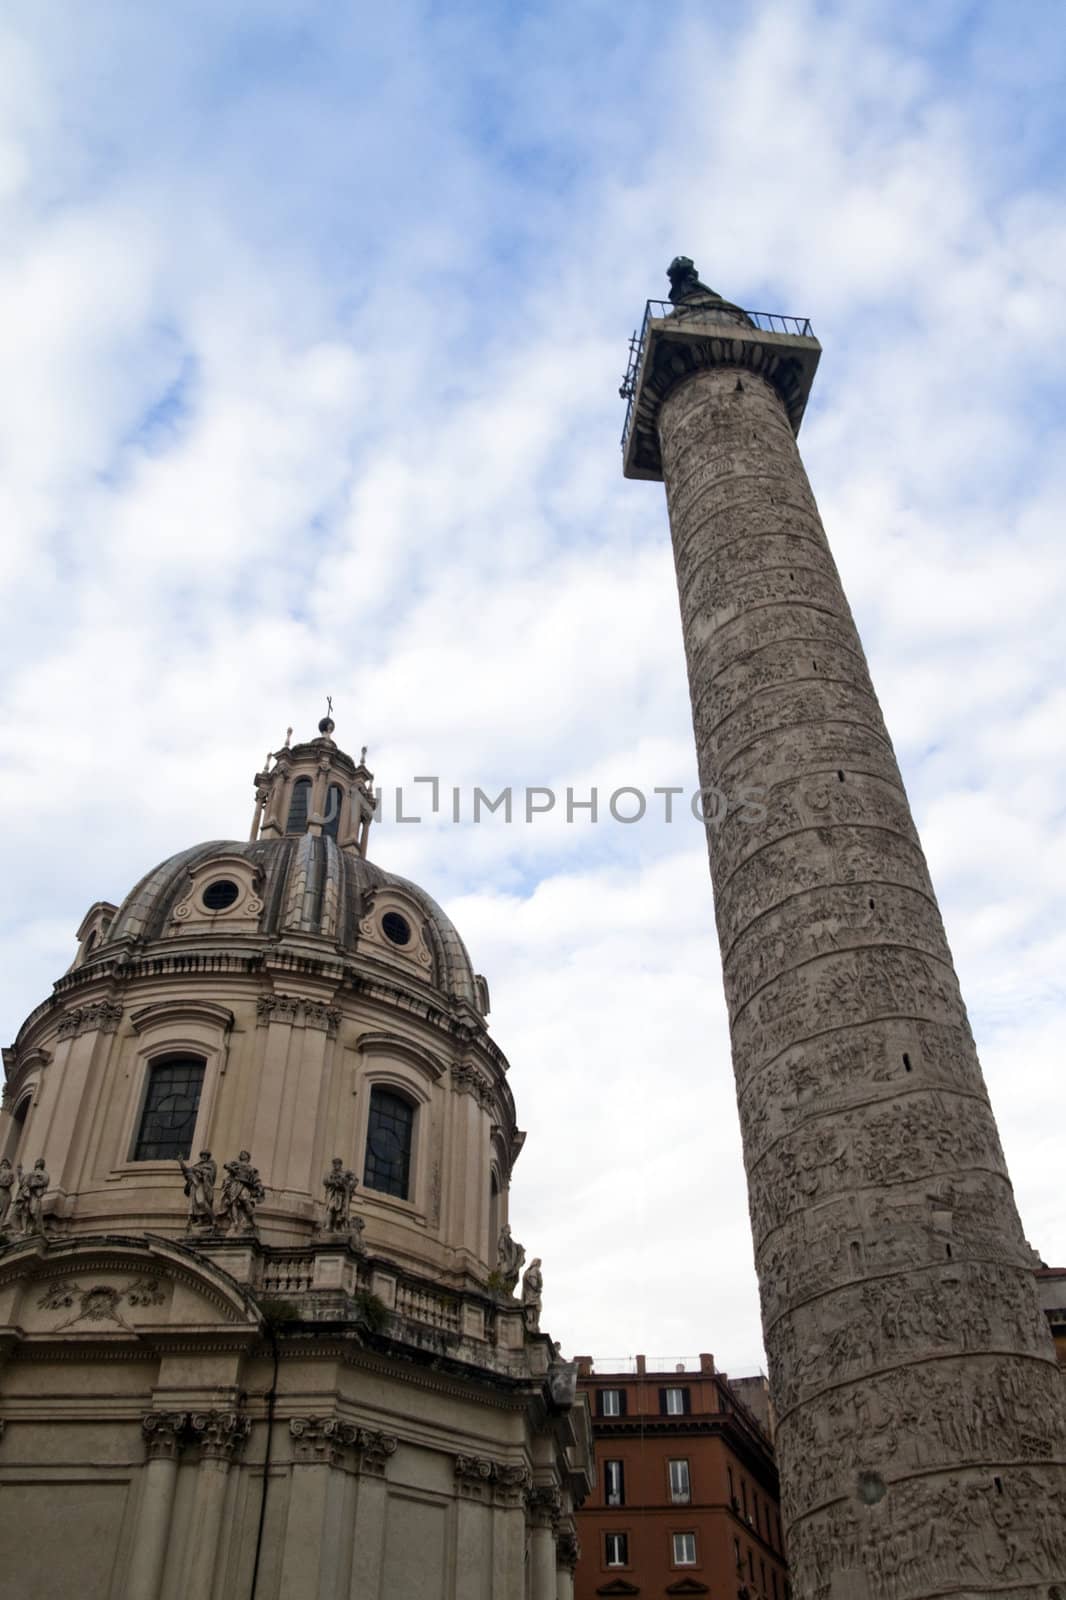 Trajan's column reaching into the blue sky, Rome, Italy